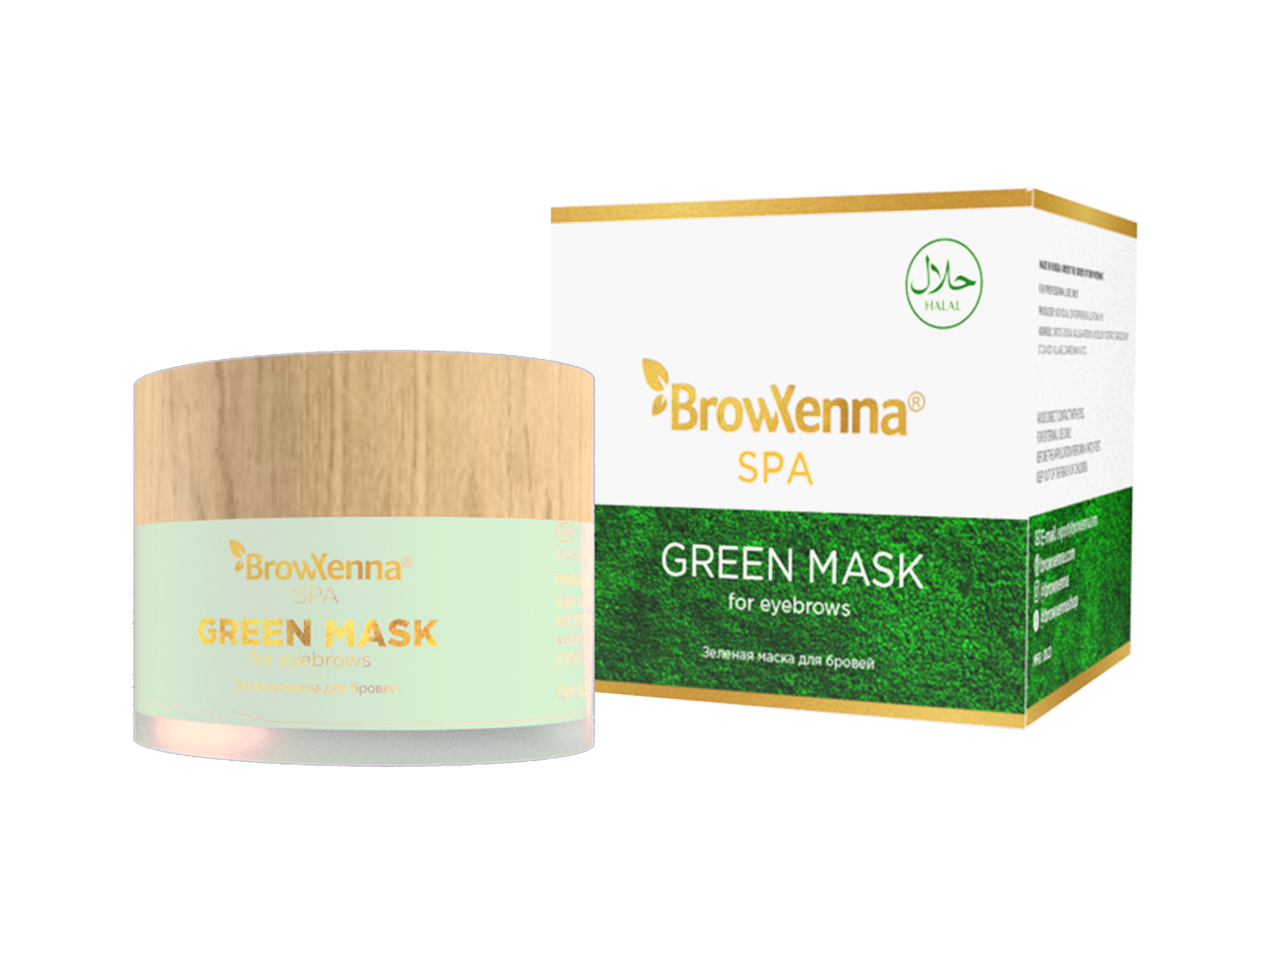 Green mask SPA line by BrowXenna®